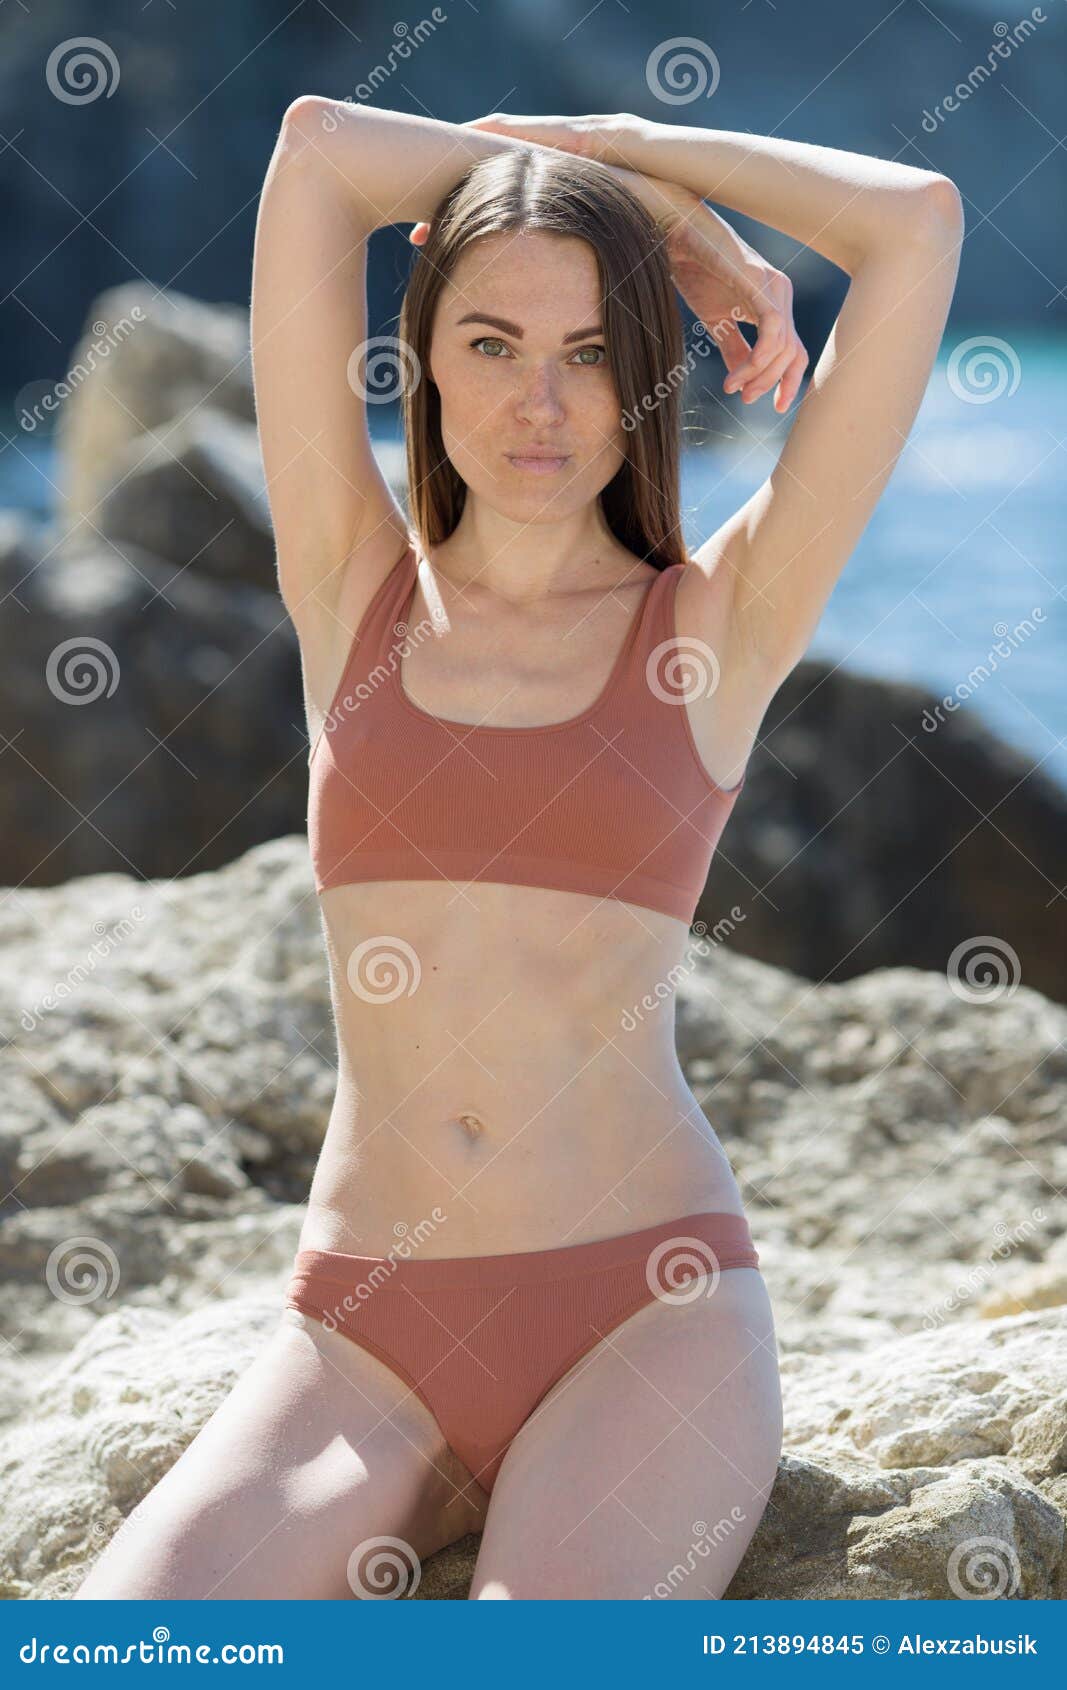 Girl with black bikini naked british 4 210 Skinny Girl Bikini Photos Free Royalty Free Stock Photos From Dreamstime